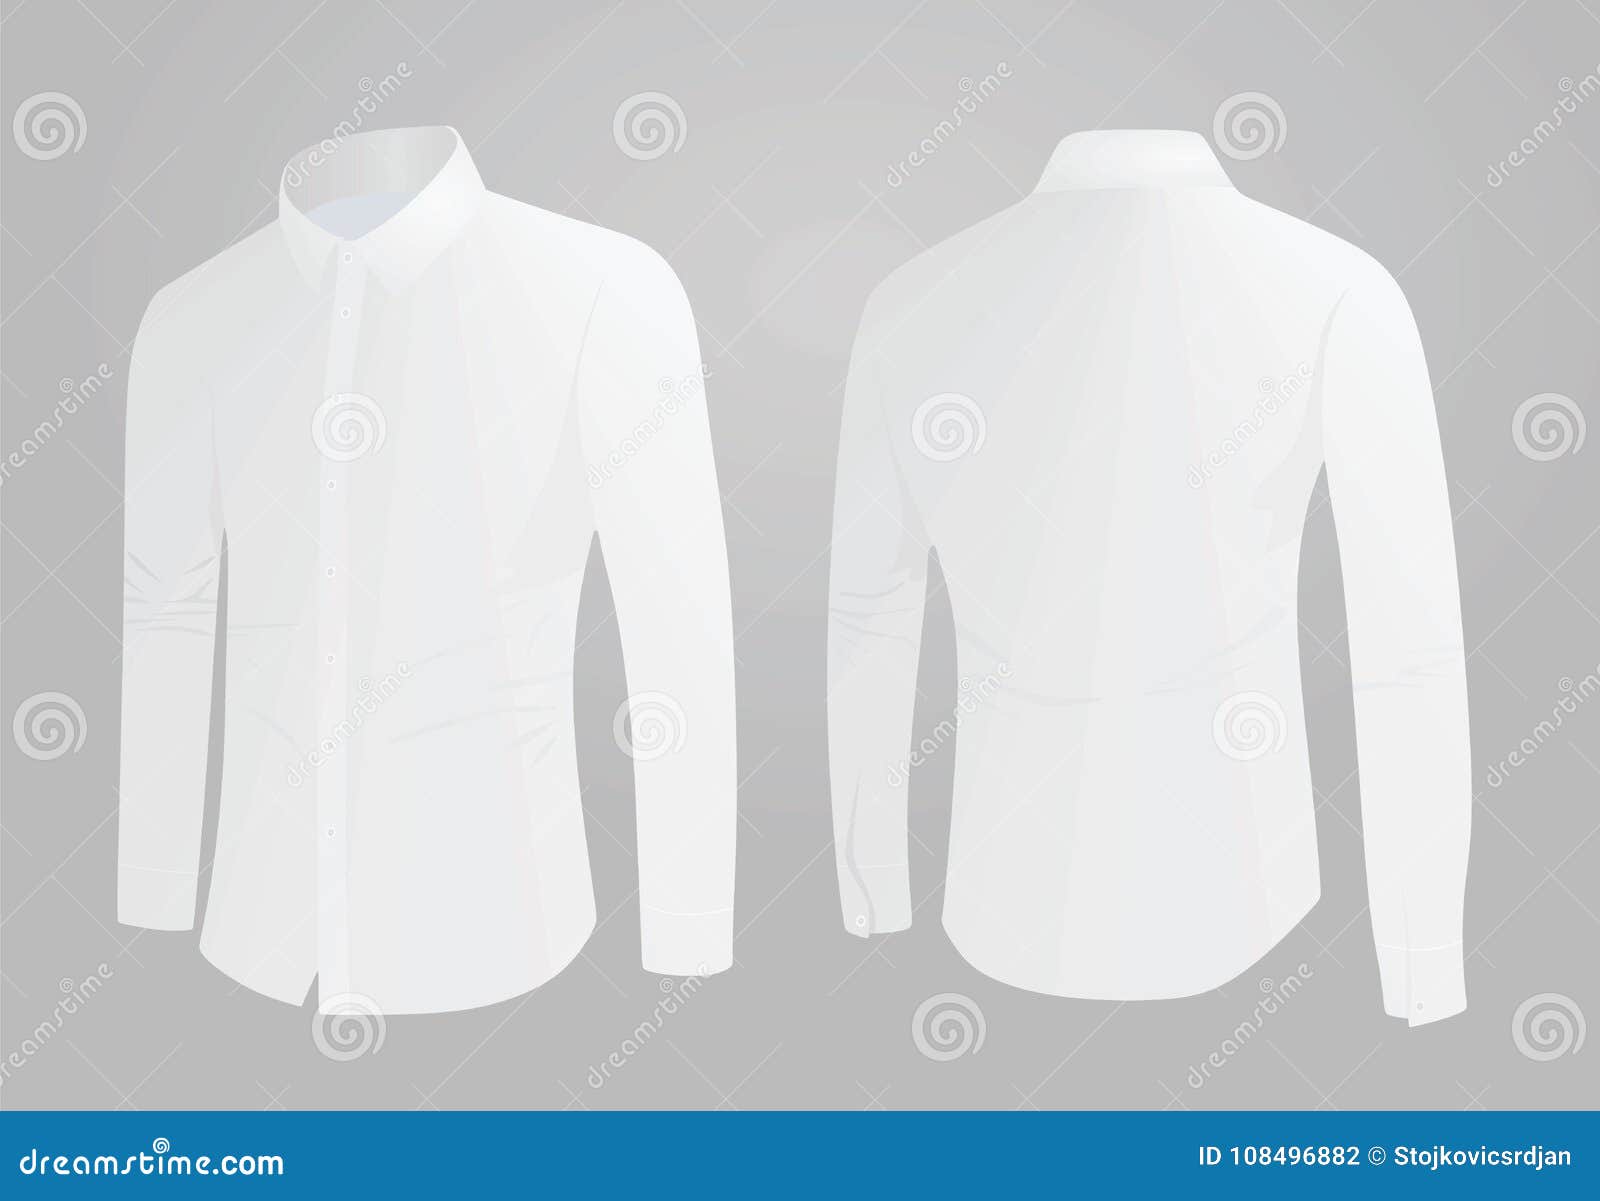 White shirt side view stock vector. Illustration of long - 108496882